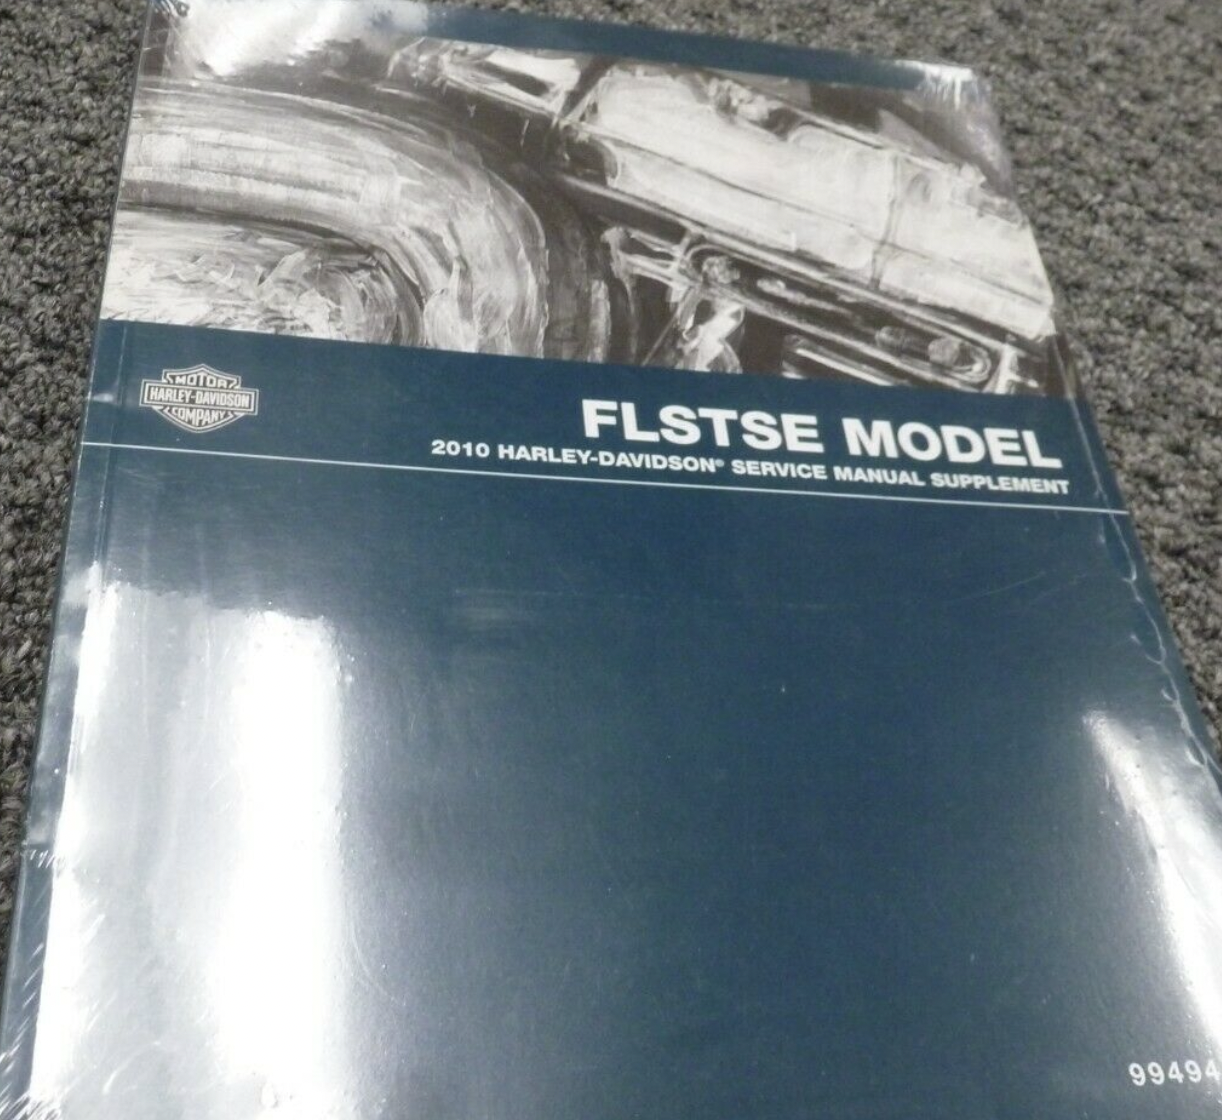 Primary image for 2010 Harley Davidson FLSTSE flstse Service Shop Repair Manual SUPPLEMENT NEW